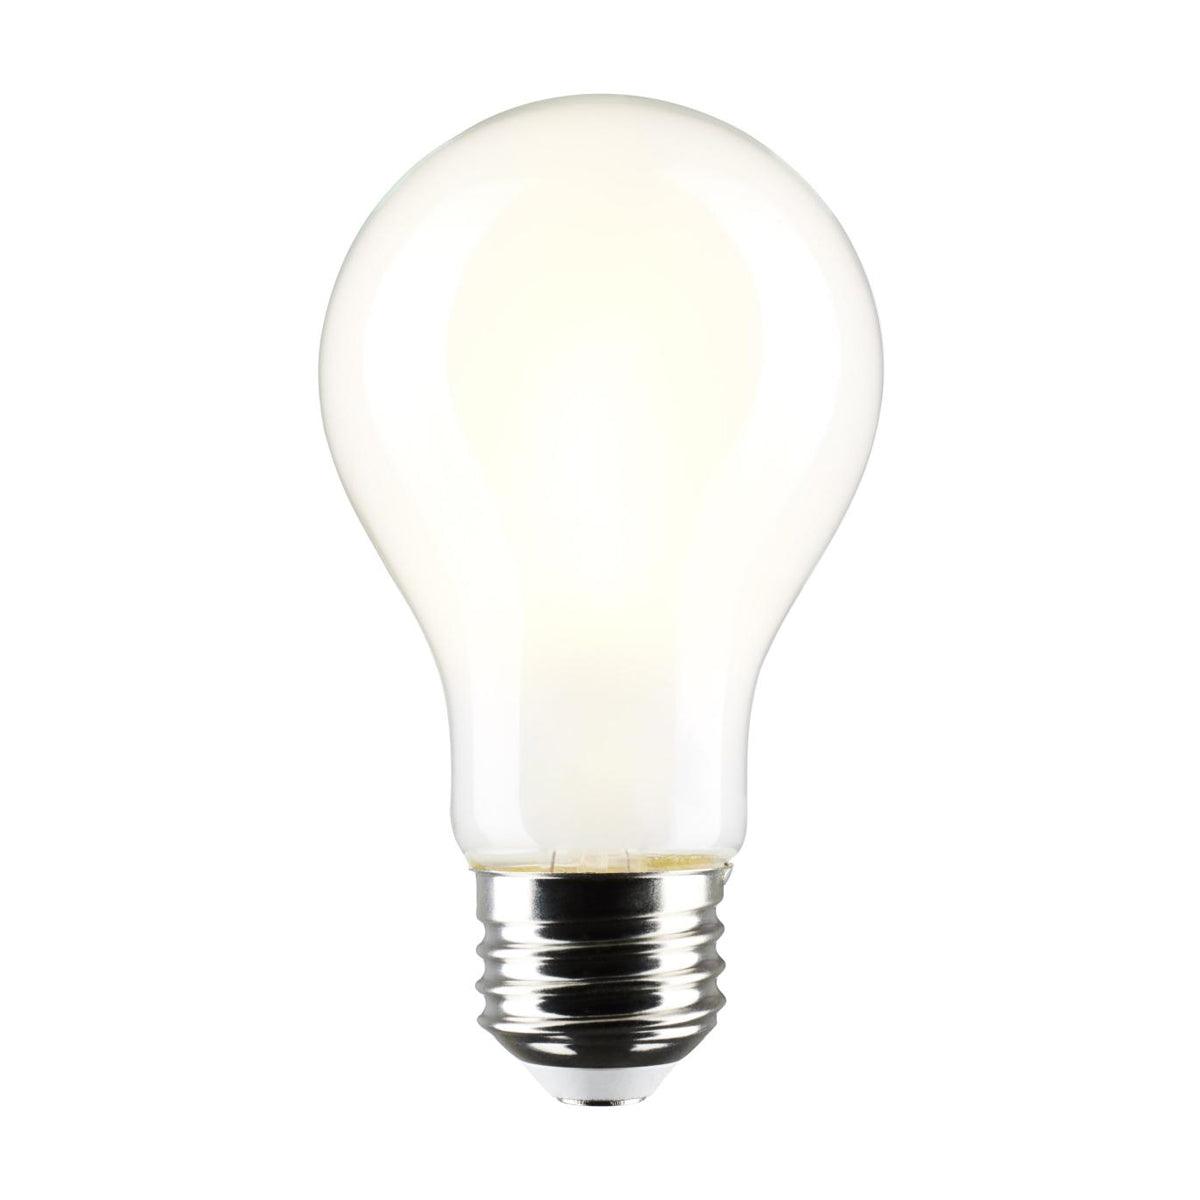 A19 LED Bulb, 100W Equivalent, 8 Watt, 800 Lumens, 3000K, E26 Medium Base, Frosted Finish, Pack Of 4